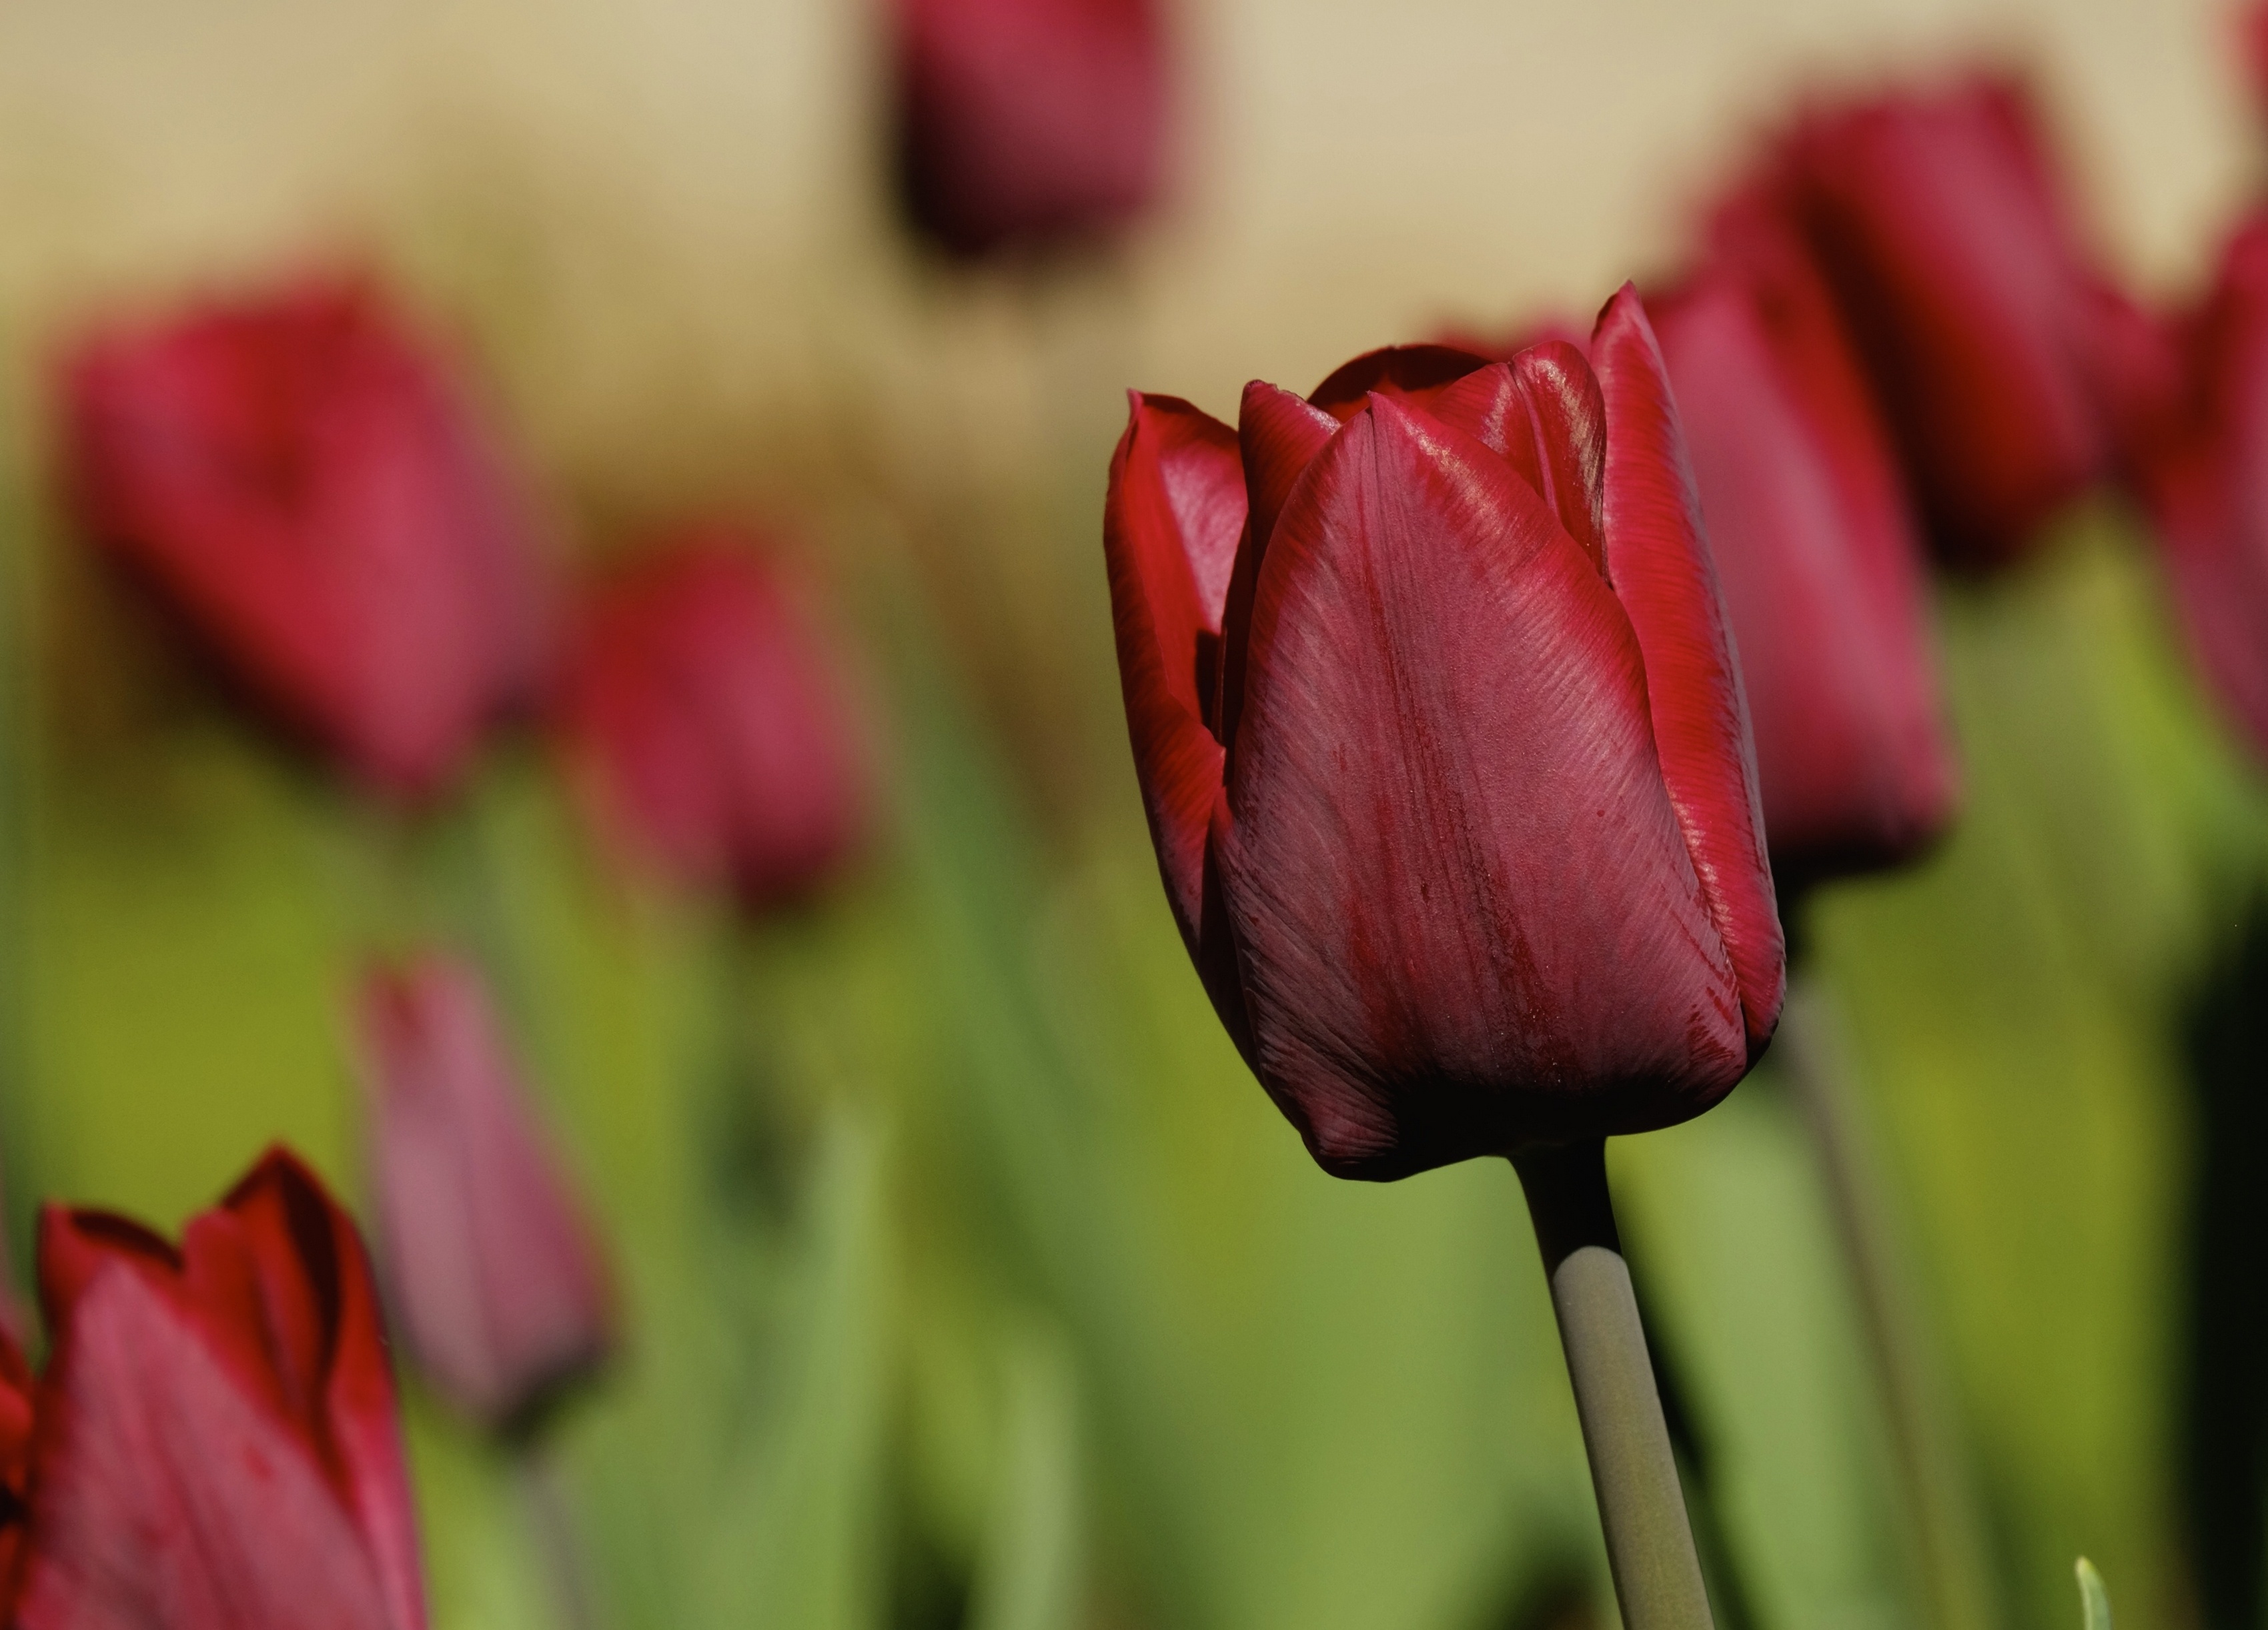 Tulips_Closeup_Red_436049.jpg